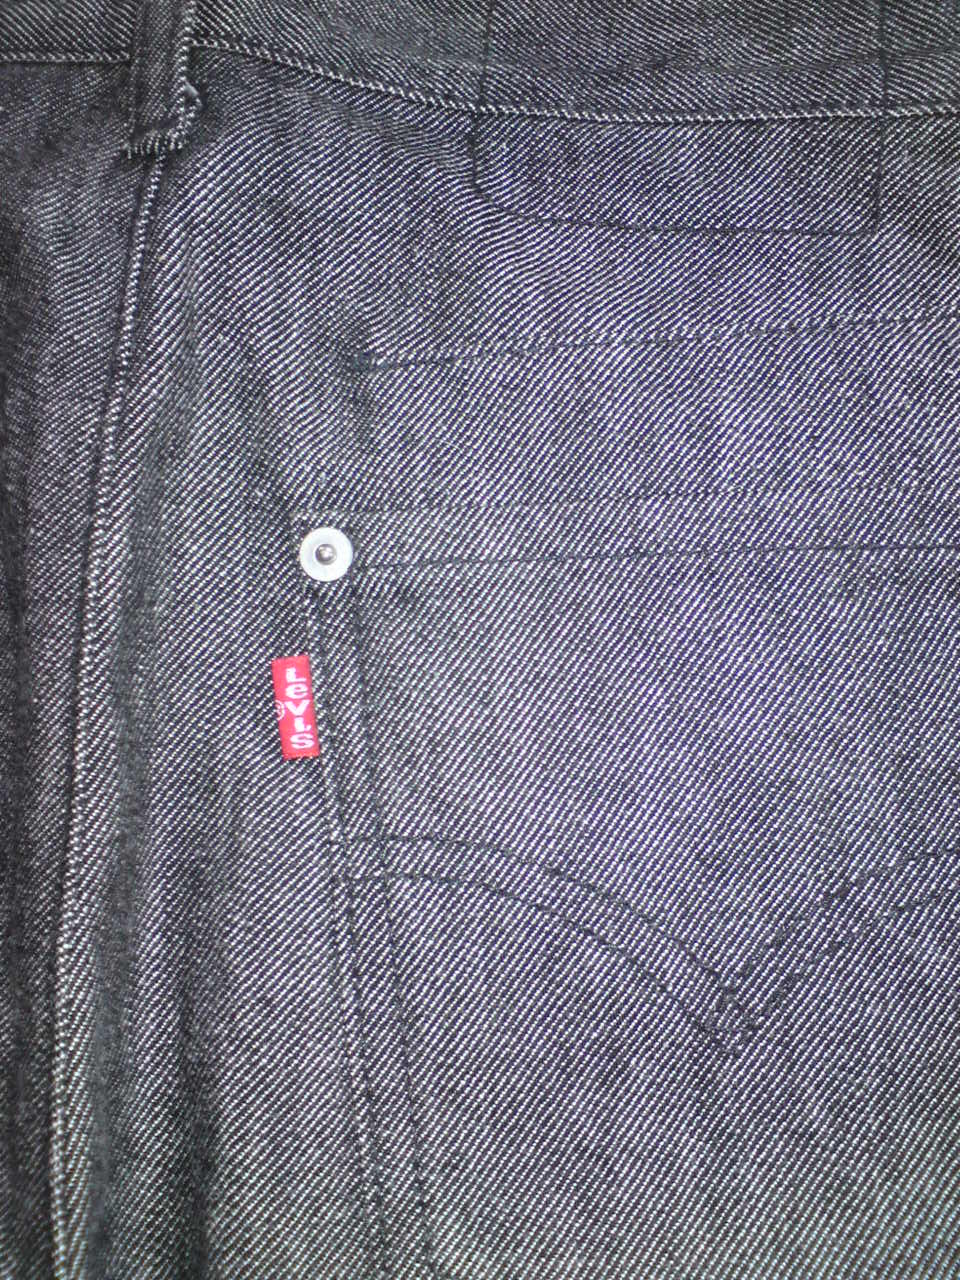 5111bundle: levis engineered jeans